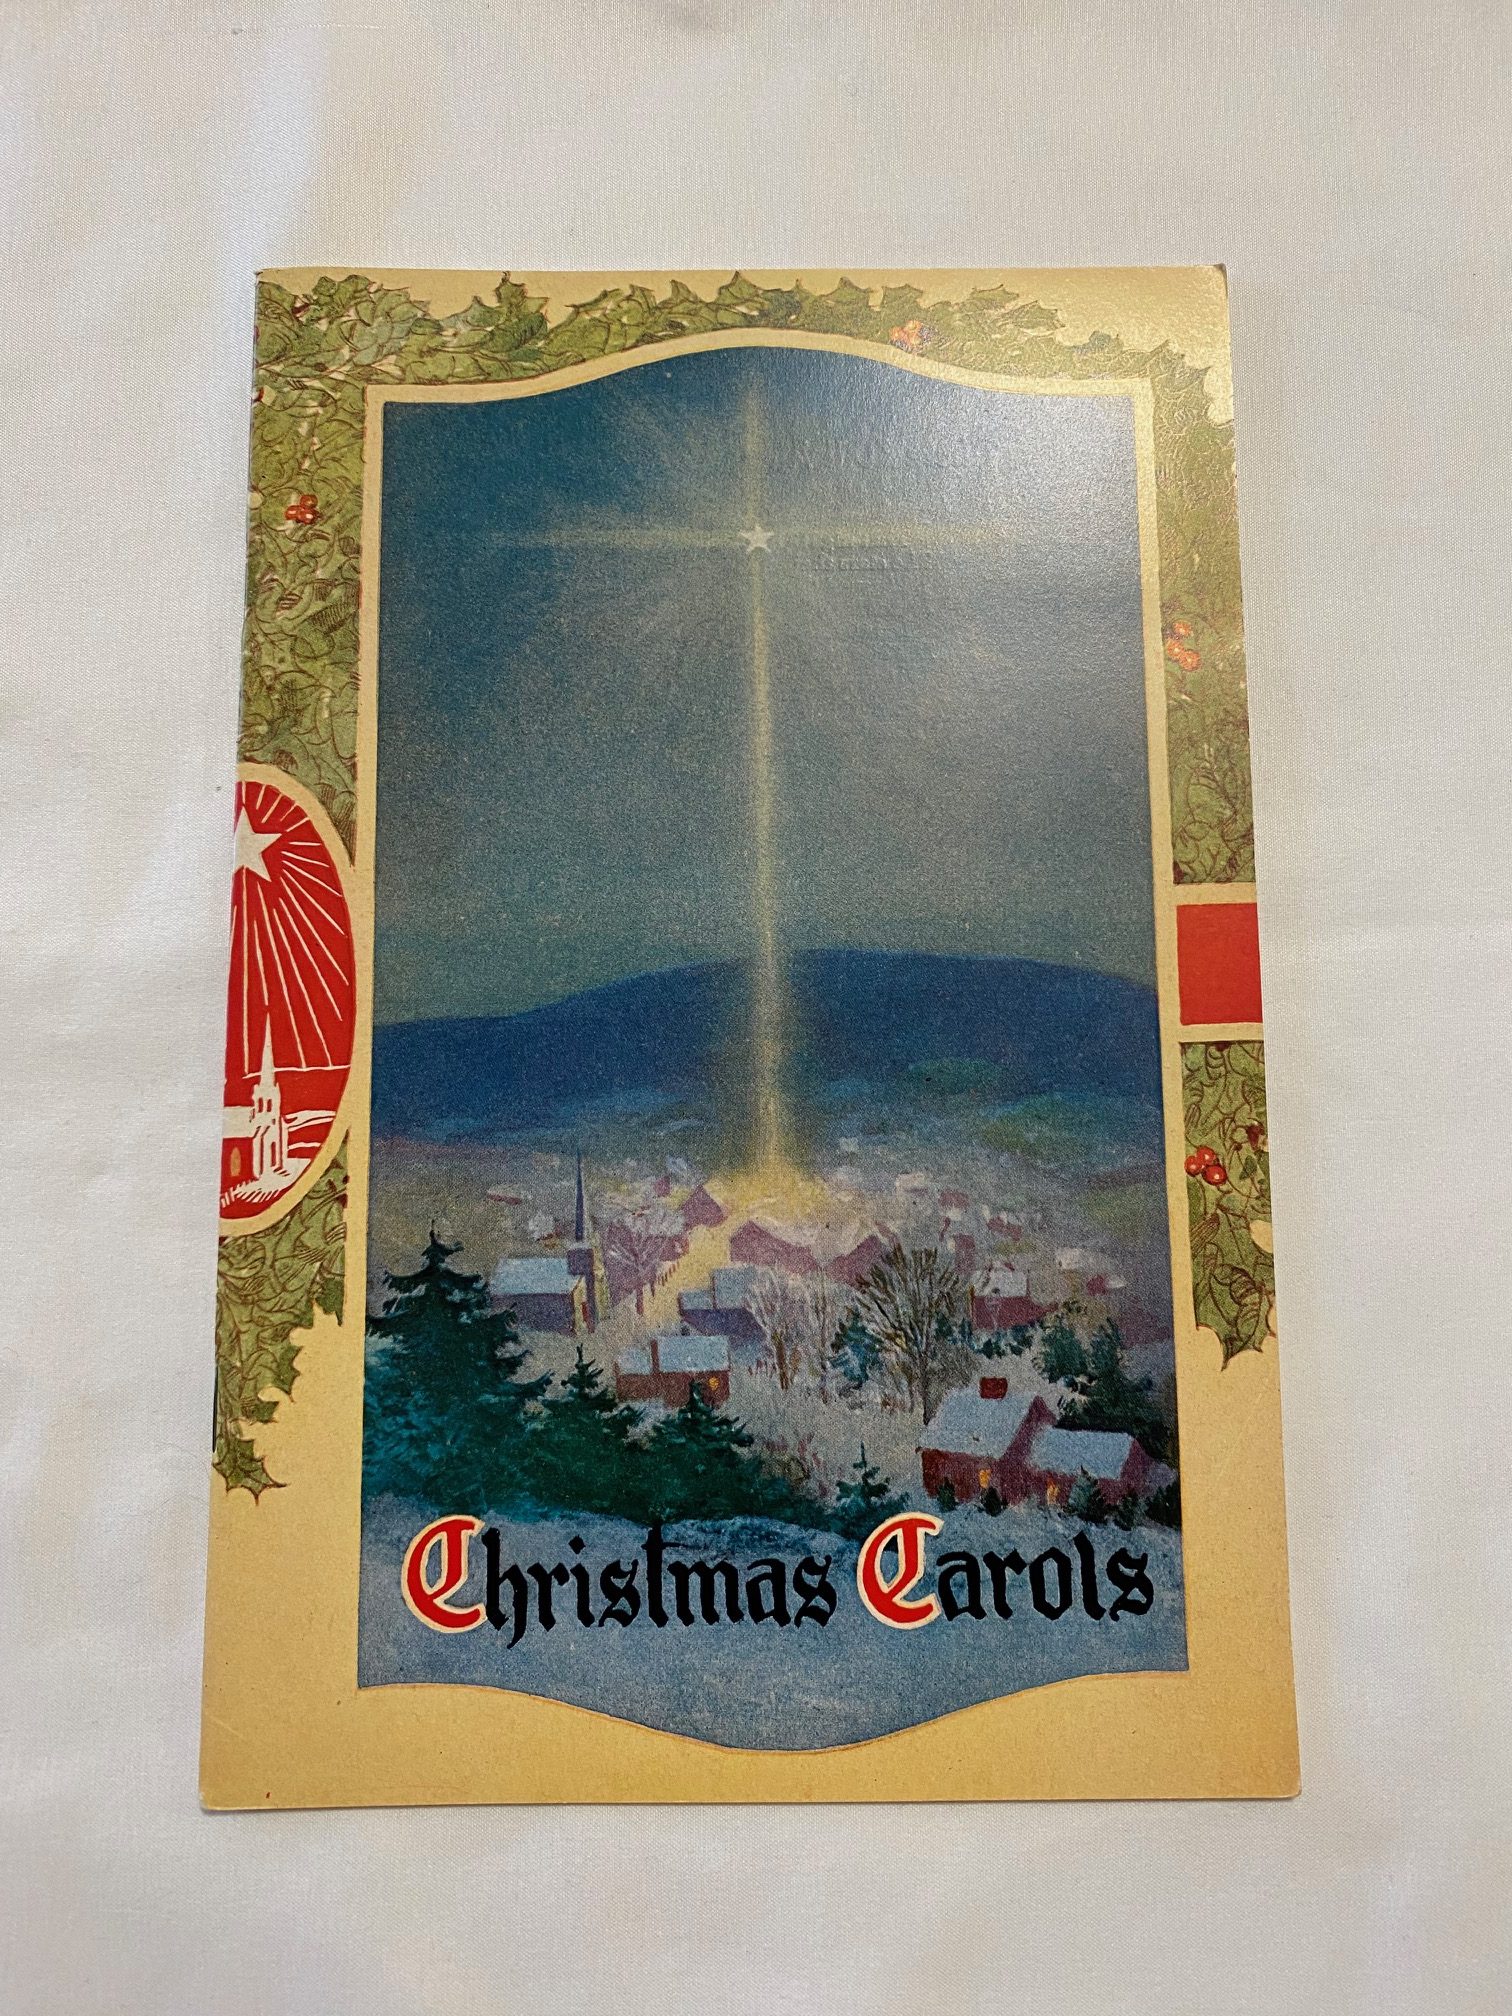 RARE 1941 Synder’s Dairy Hazelton, PA Christmas Carols Booklet APPEARS UNUSED